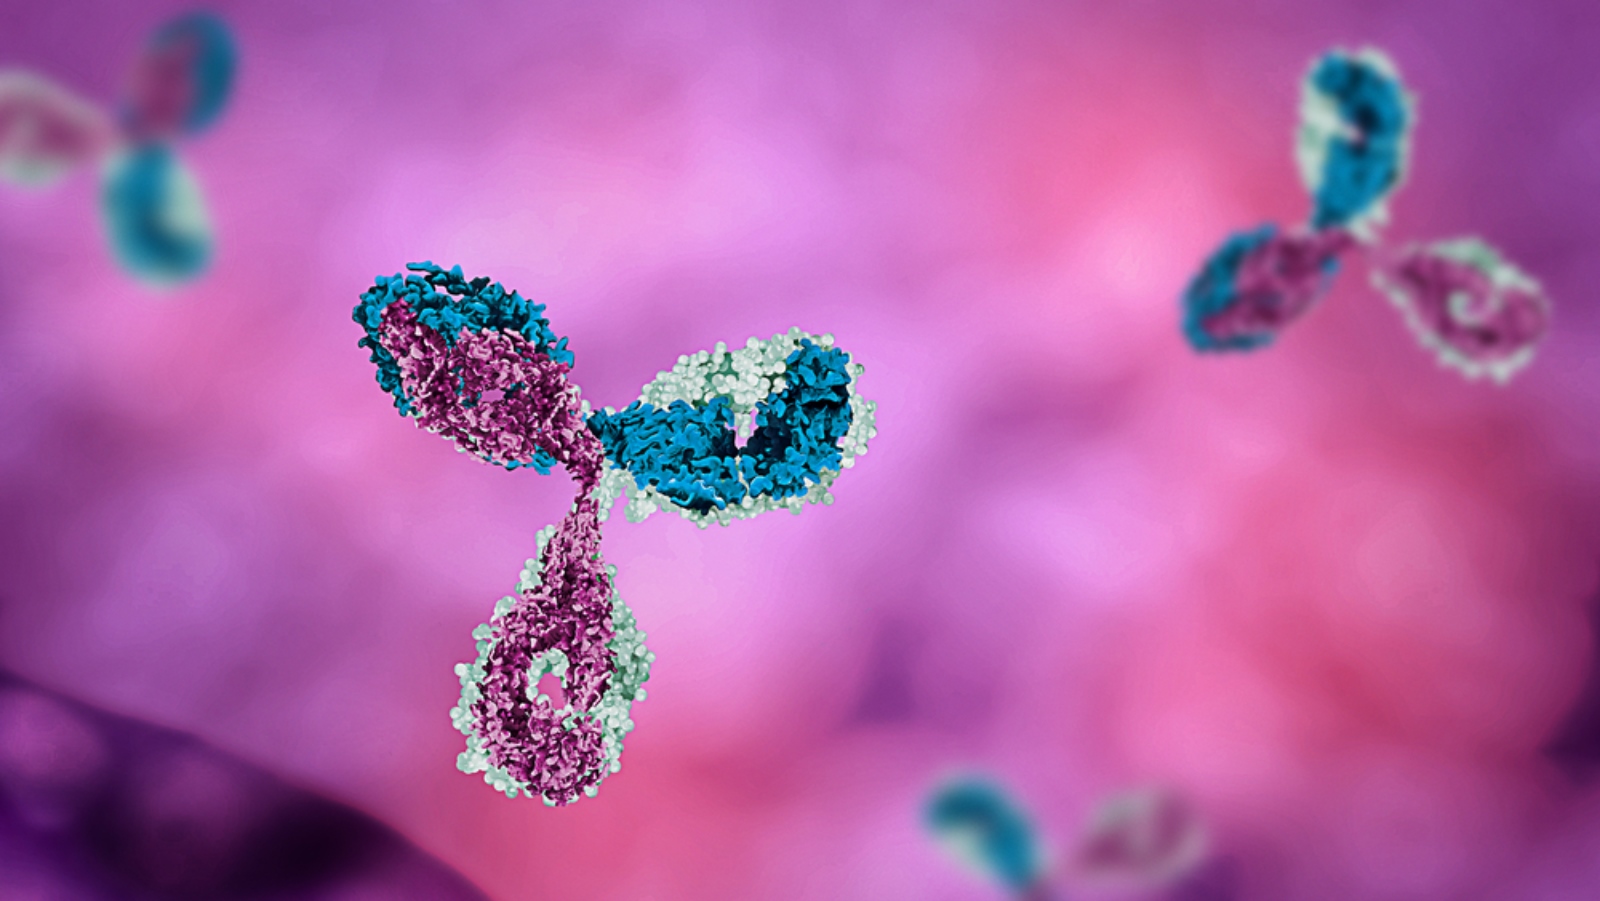 Antibody 3D art by Mirror Images via Shutterstock.com